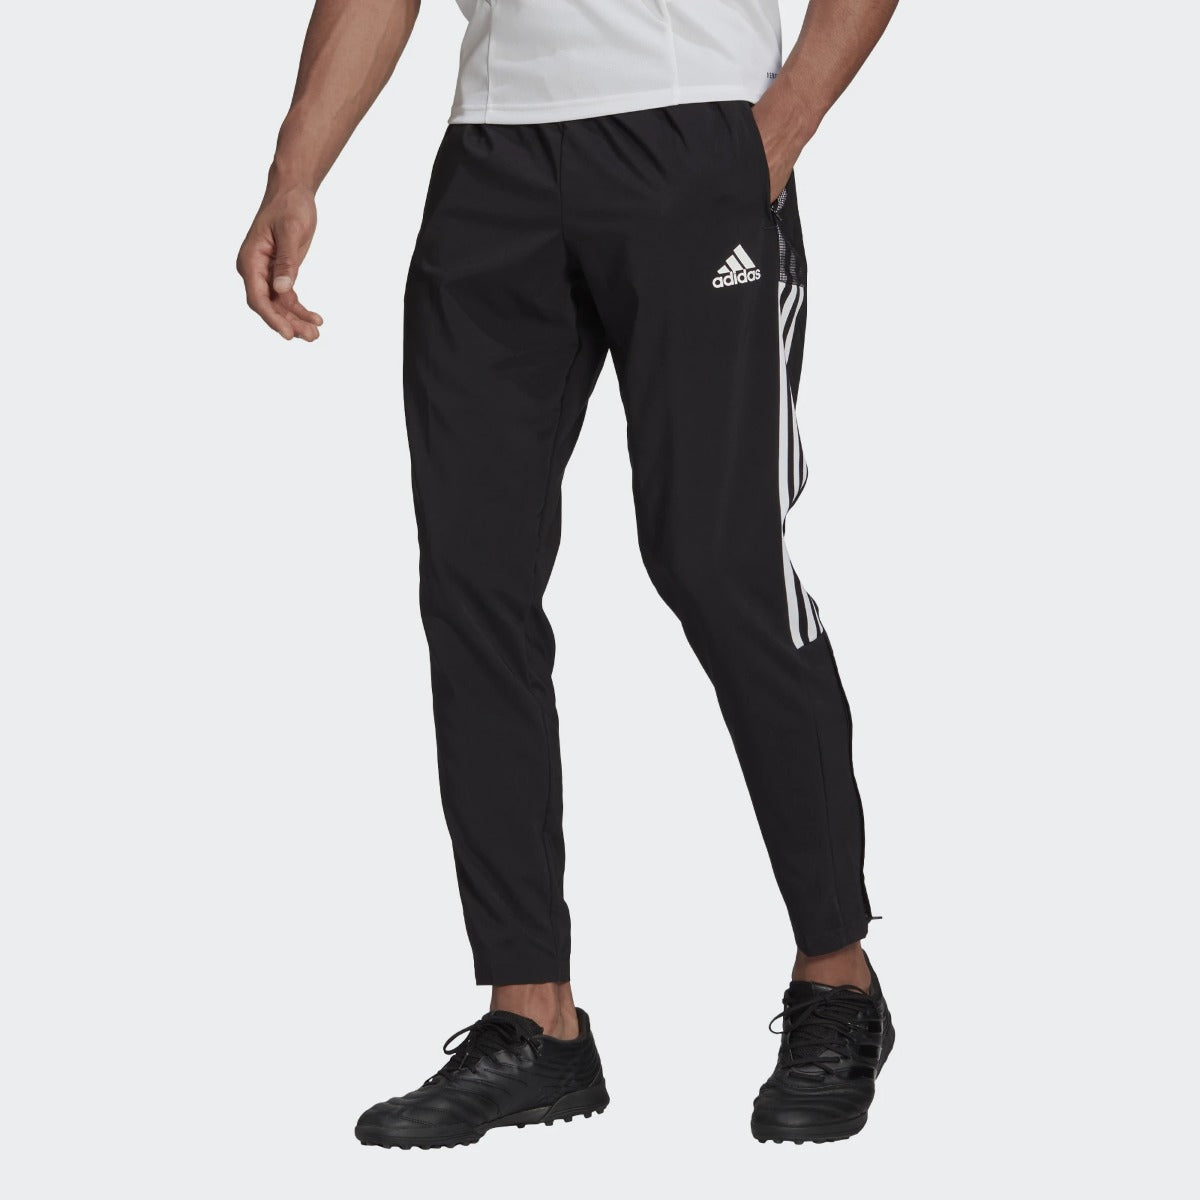 Adidas Tiro Track Pants - Black/White